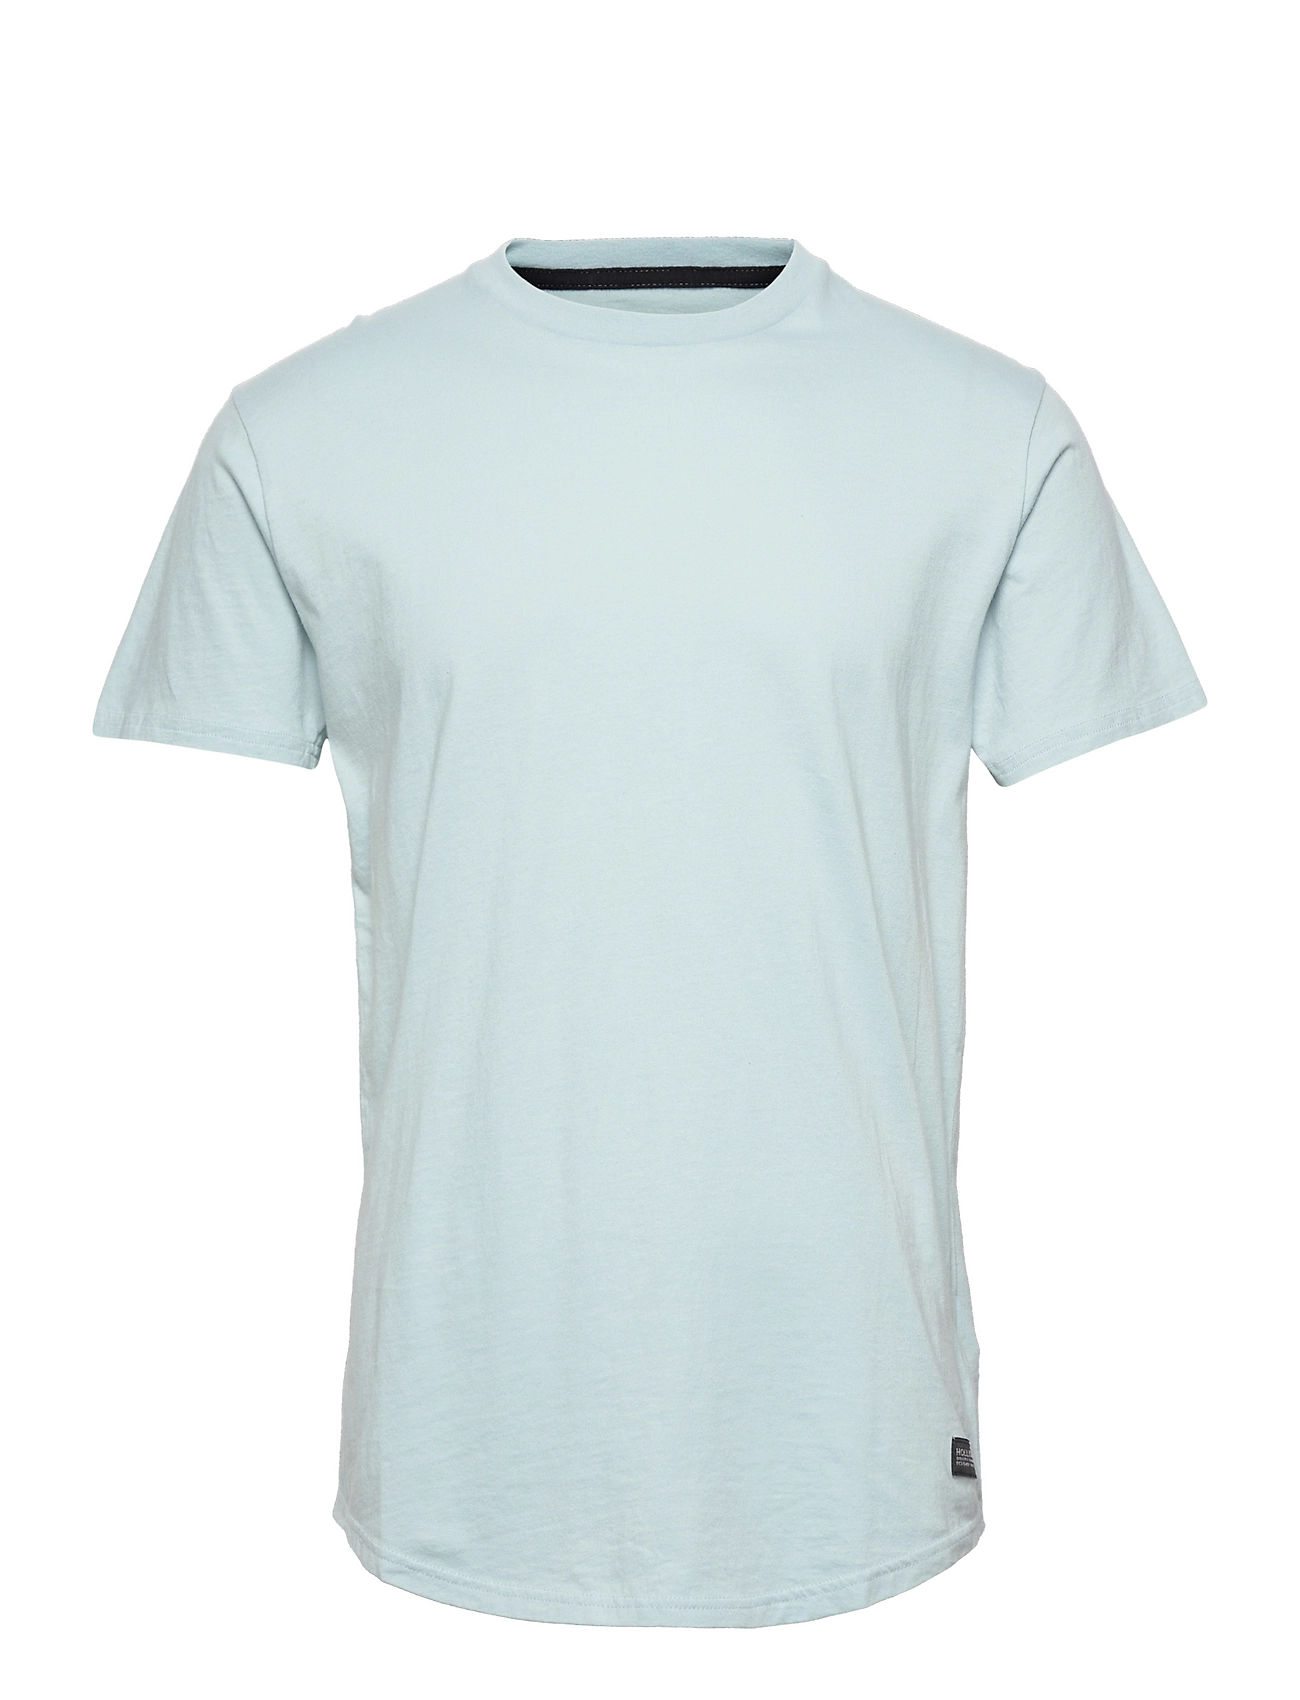 Hco. Guys Knits T-shirts Short-sleeved Blå Hollister